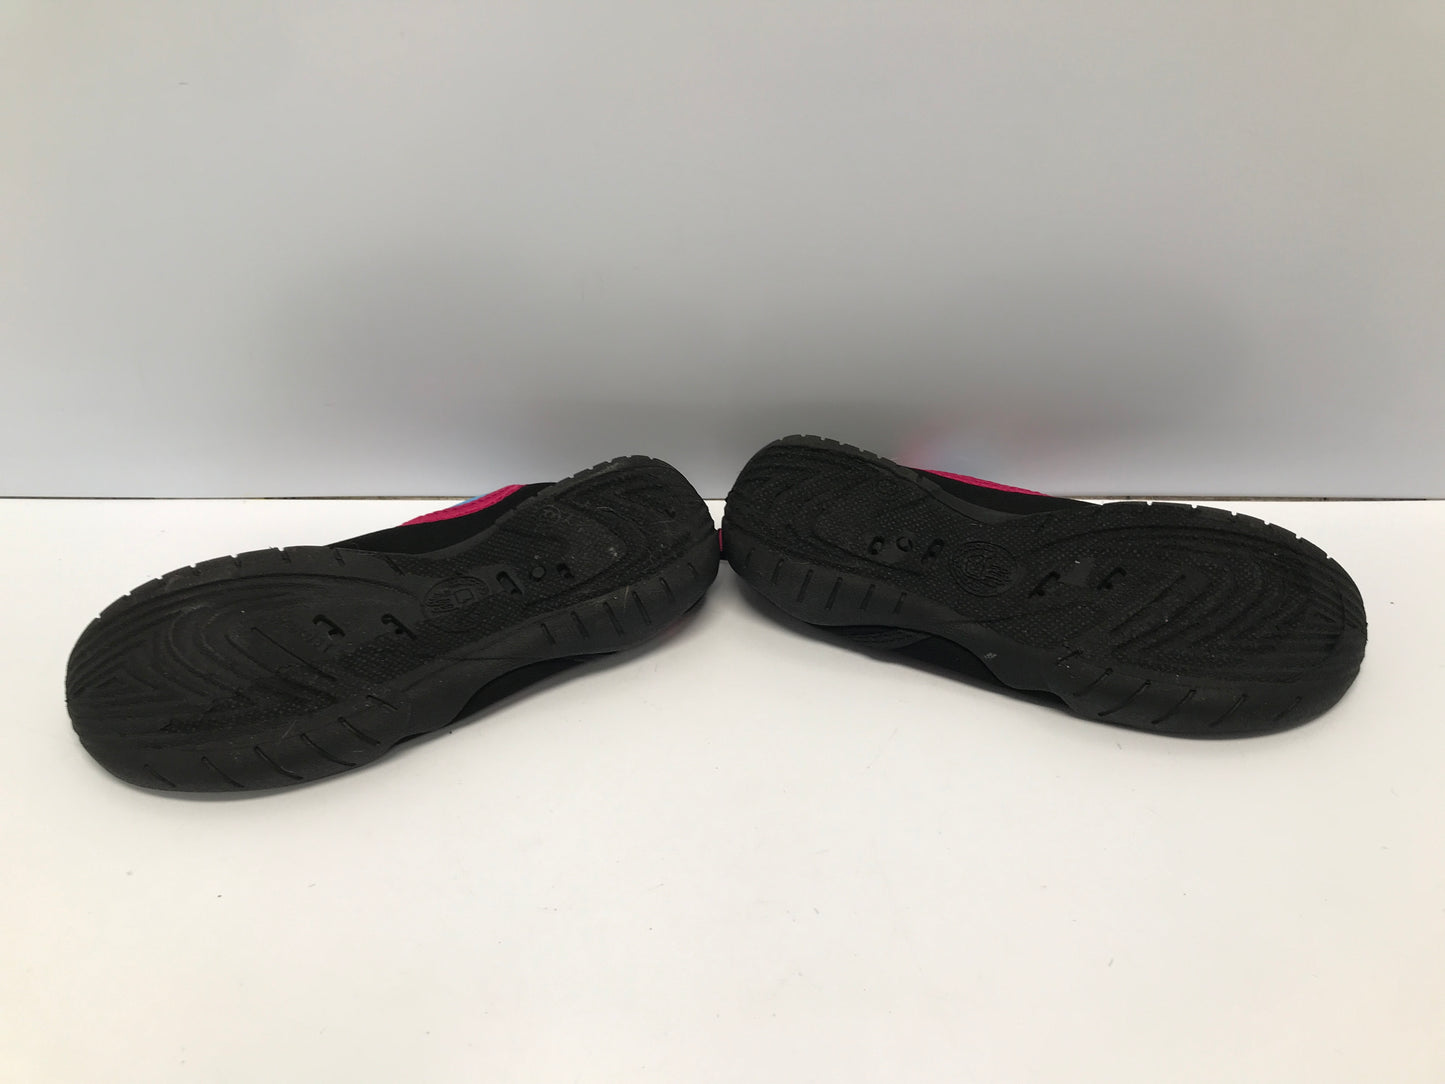 Body Glove Swim Beach Surf Shoes Child Size 3 Black Pink